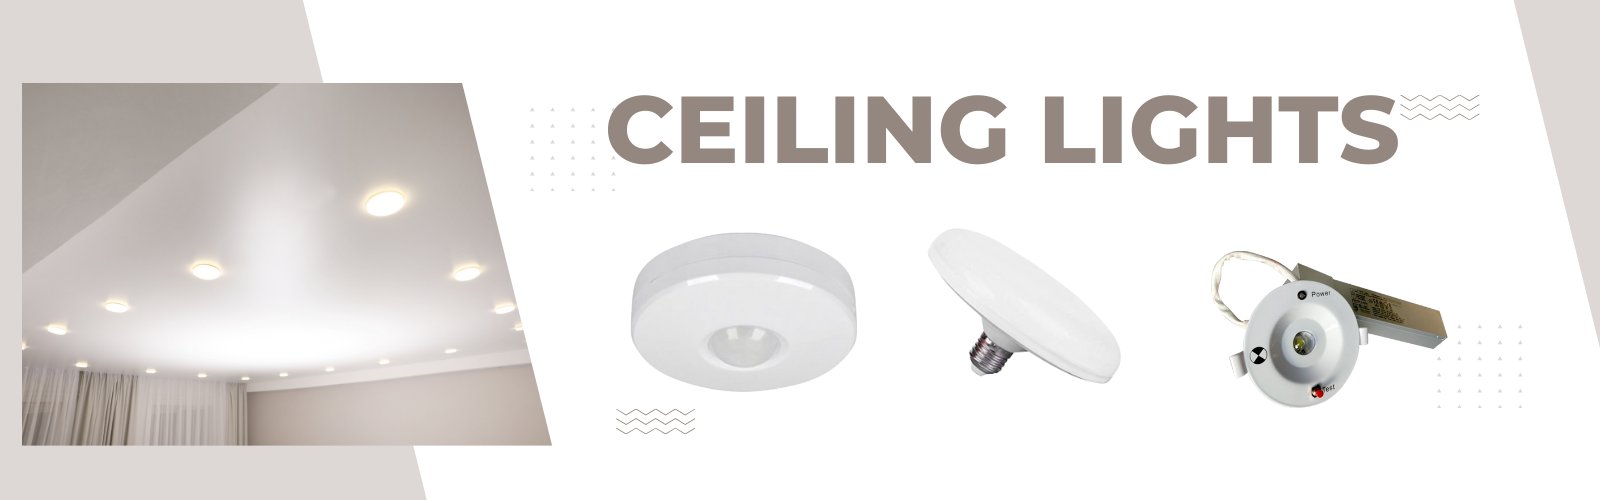 LED Ceiling Lights Ecoshift Shopify